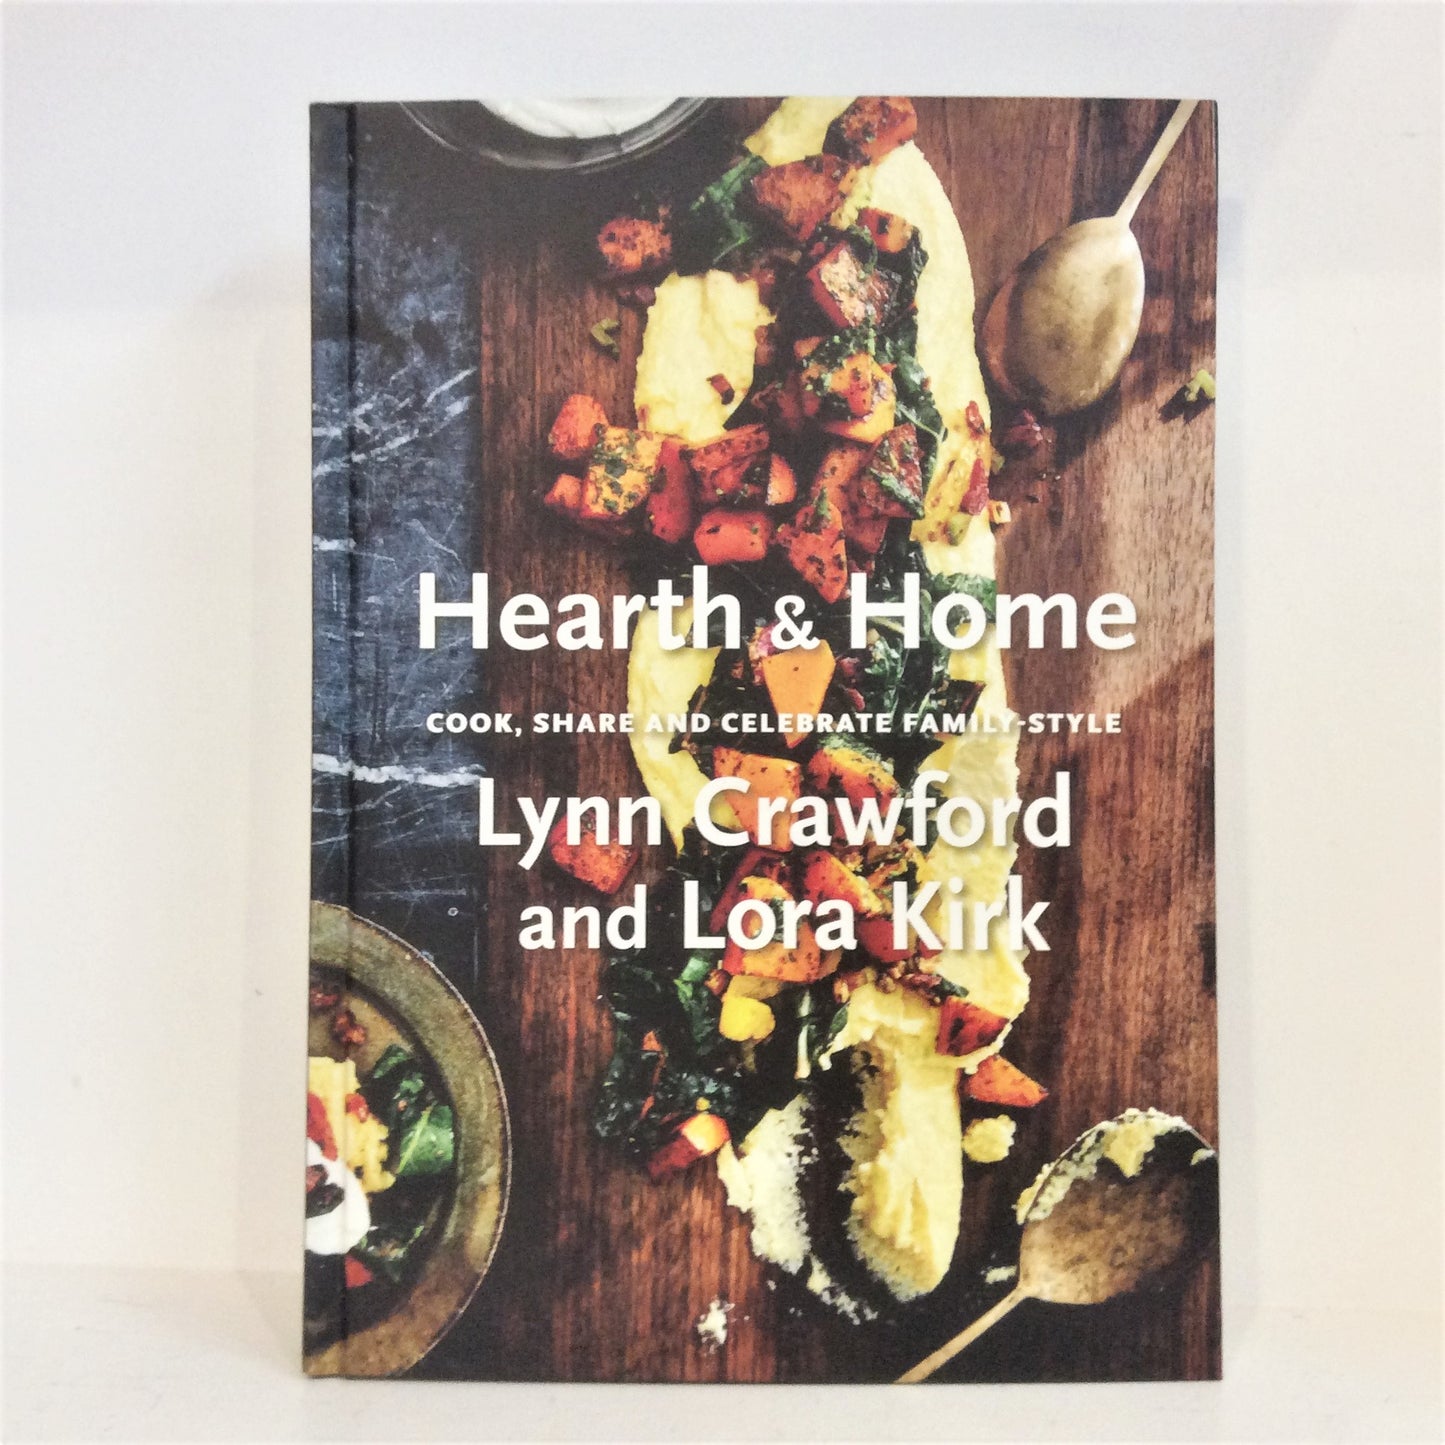 Hearth & Home by Lynn Crawford, Lora Kirk